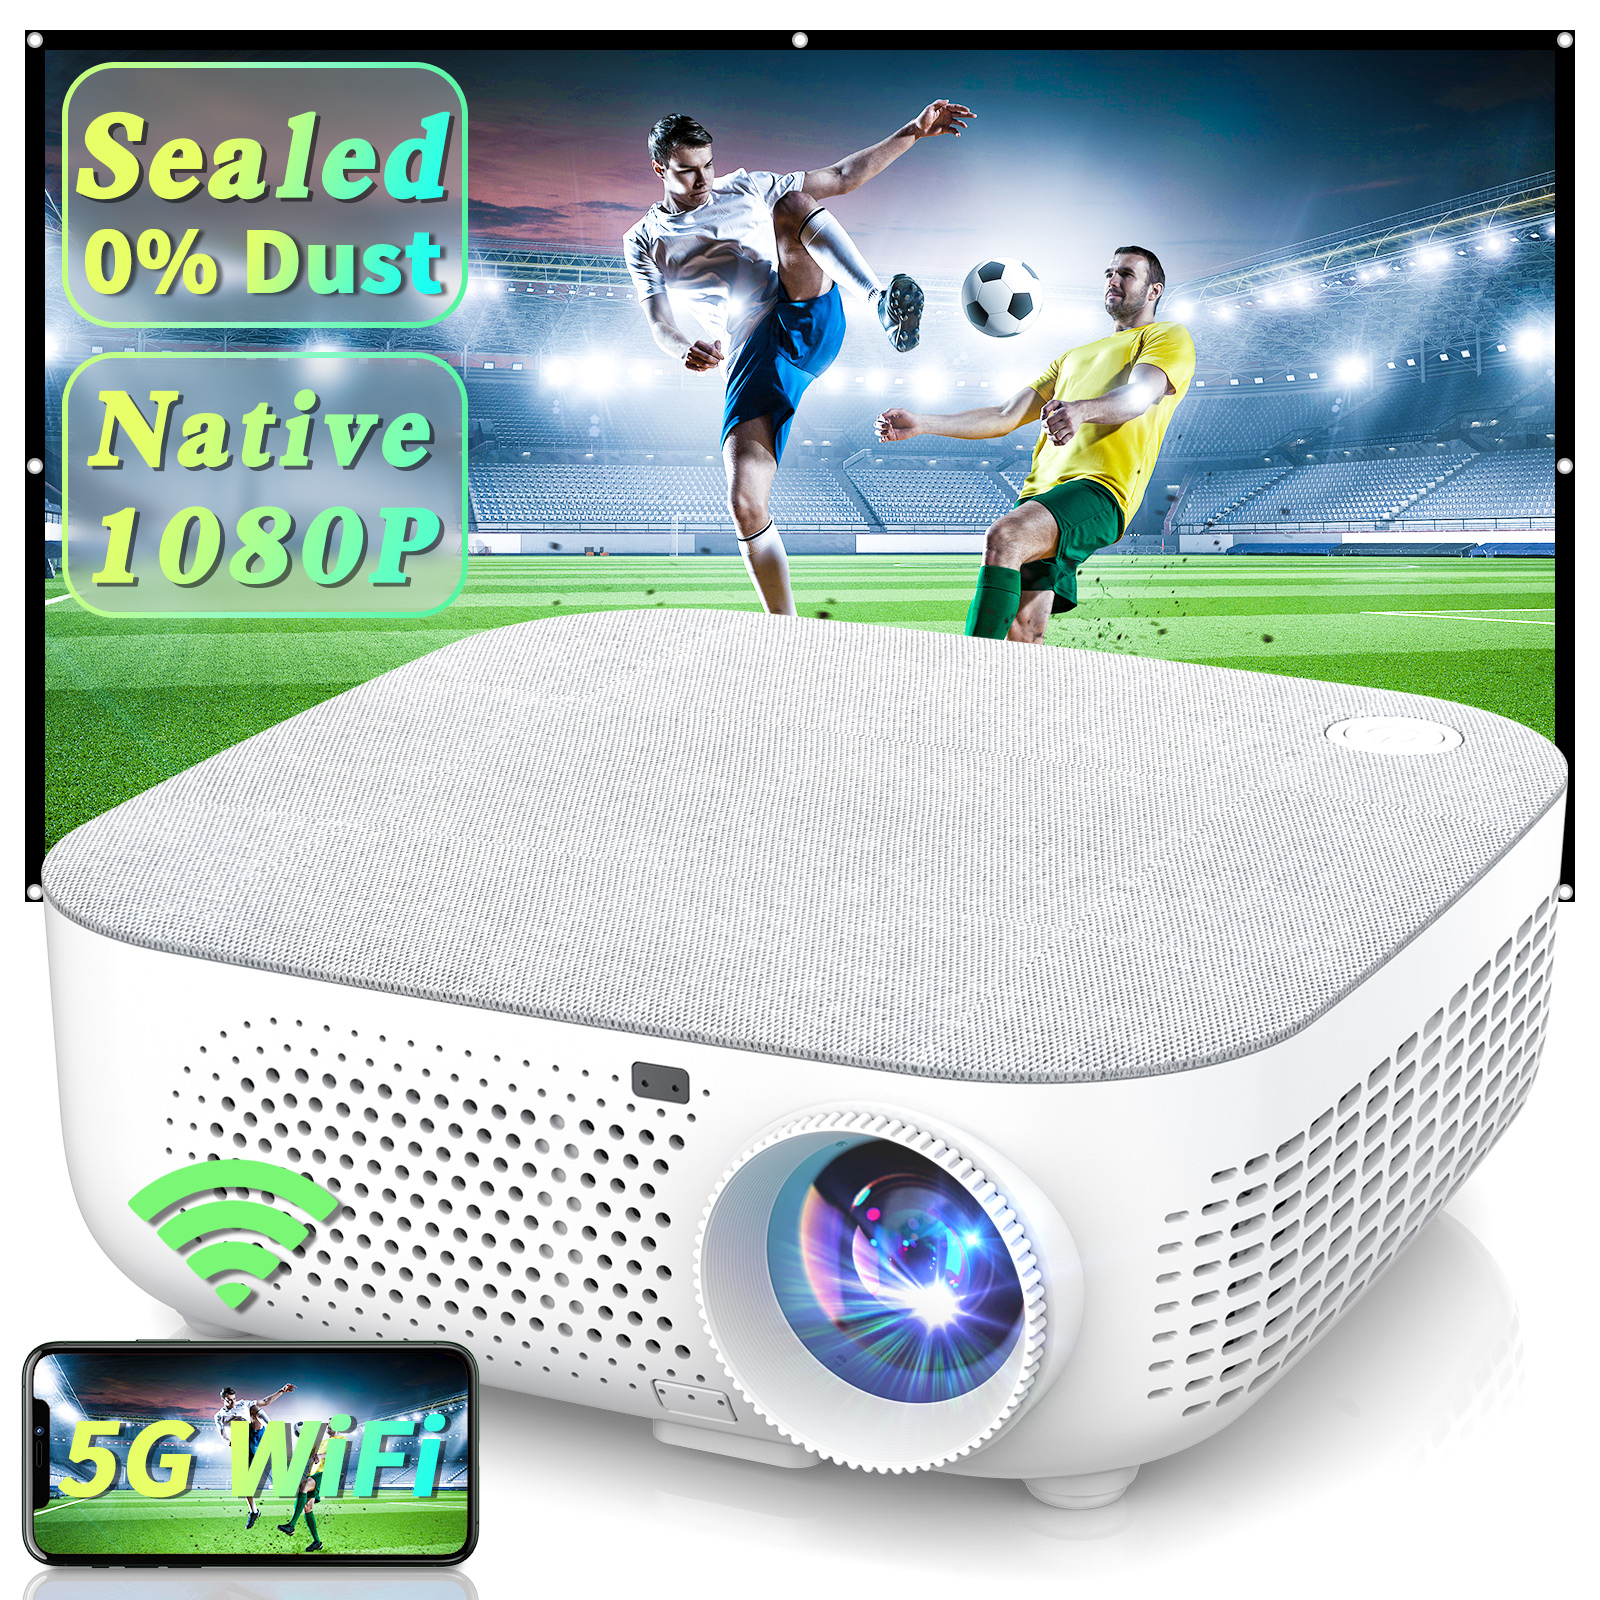 Full Sealed Optical & dustproof bluetooth projector-G1